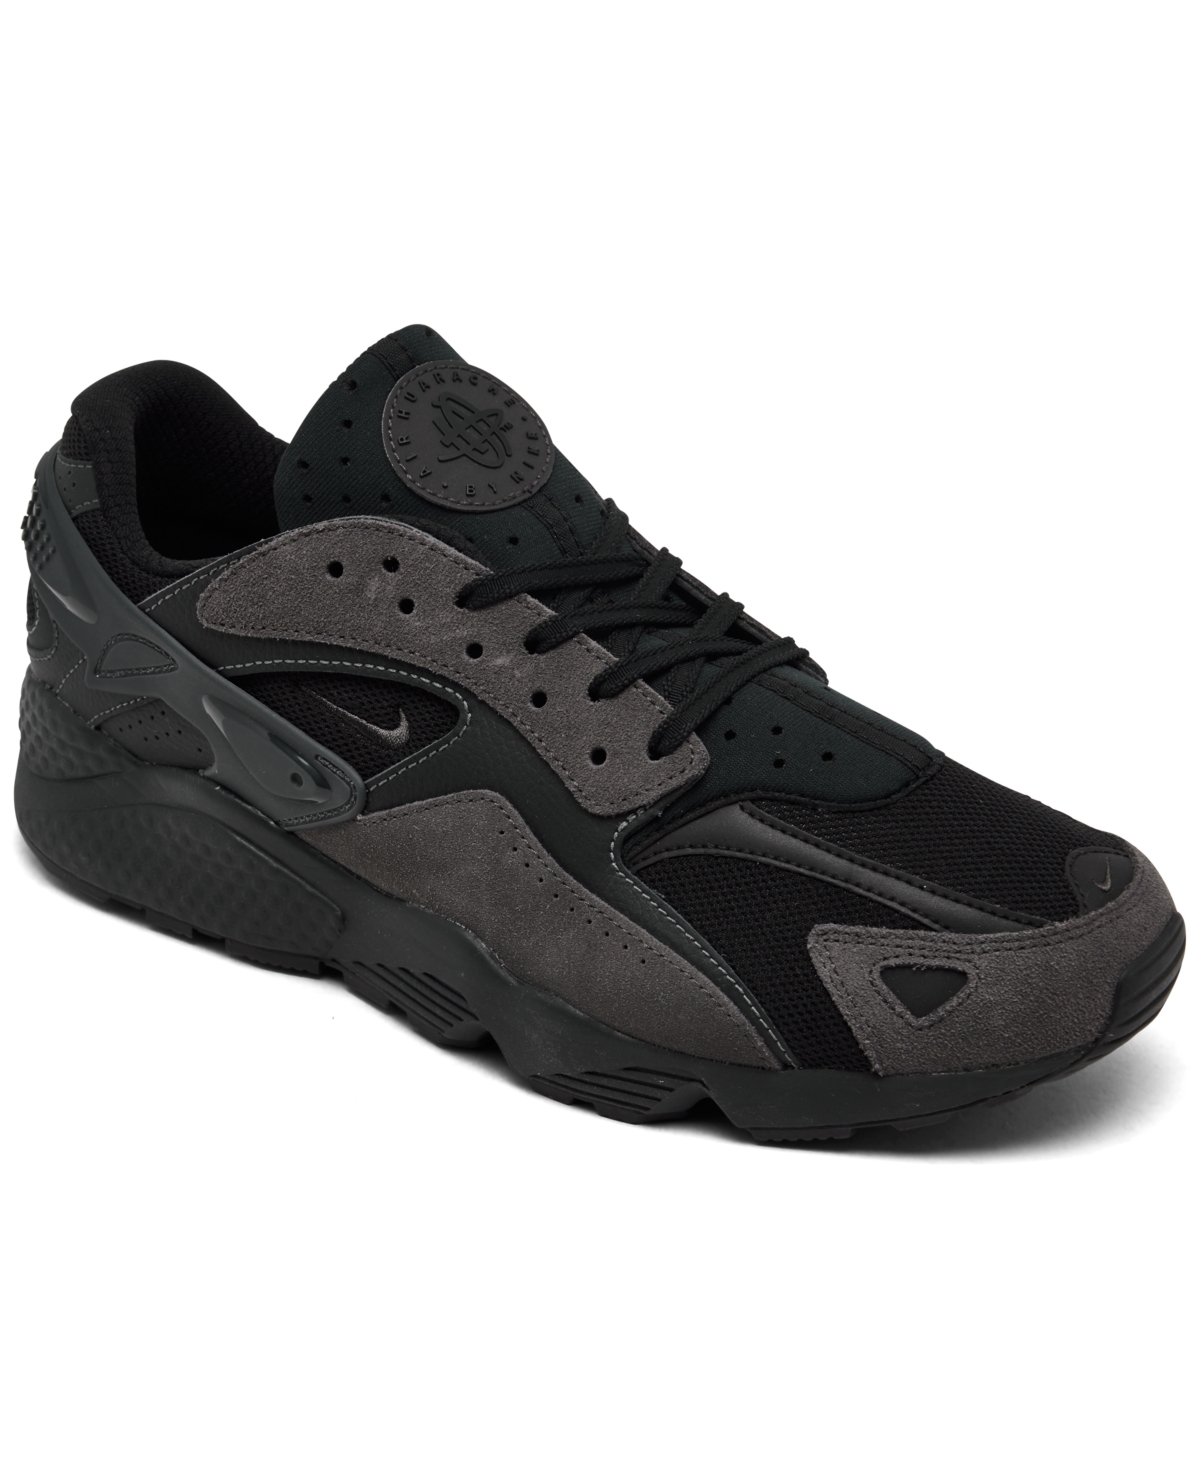 Men's Huarache Runner Casual Sneakers from Finish Line - Black, Medium Ash